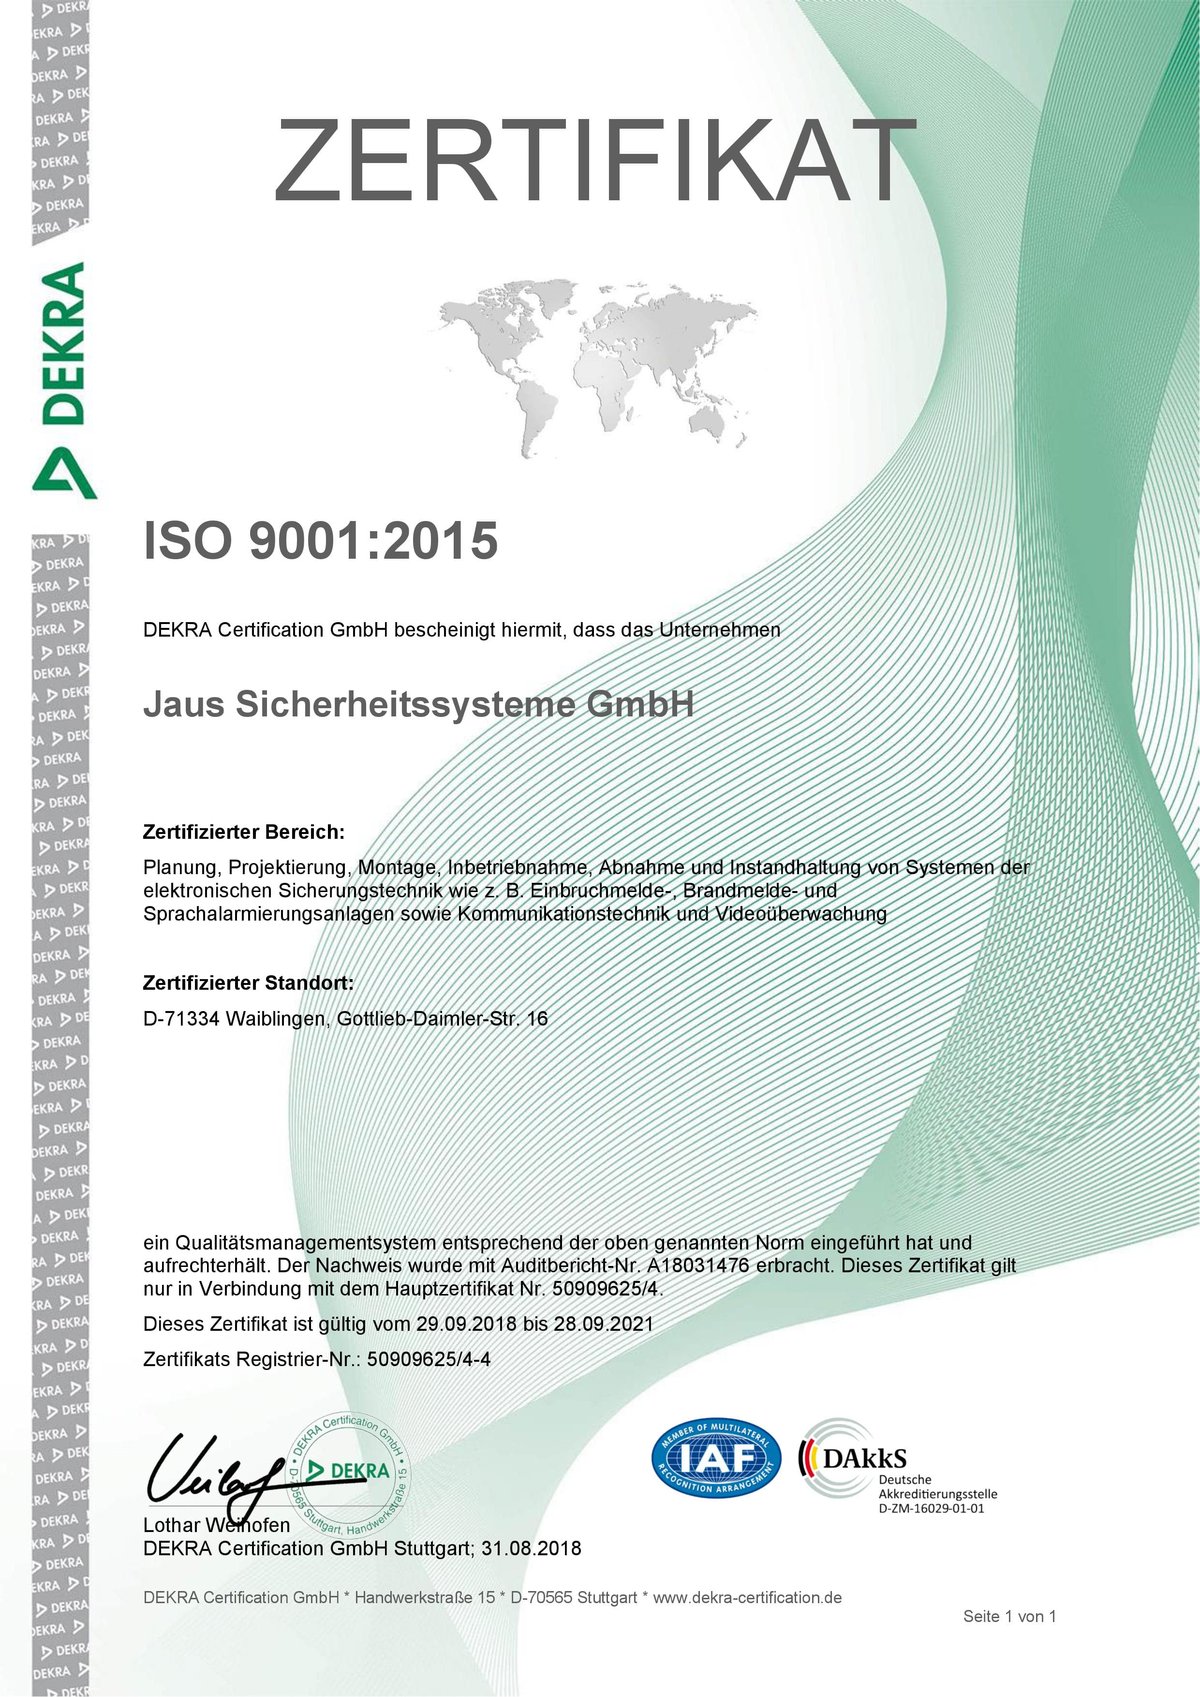 Zertifikat, Jaus Sicherheitssysteme, ISO 9001